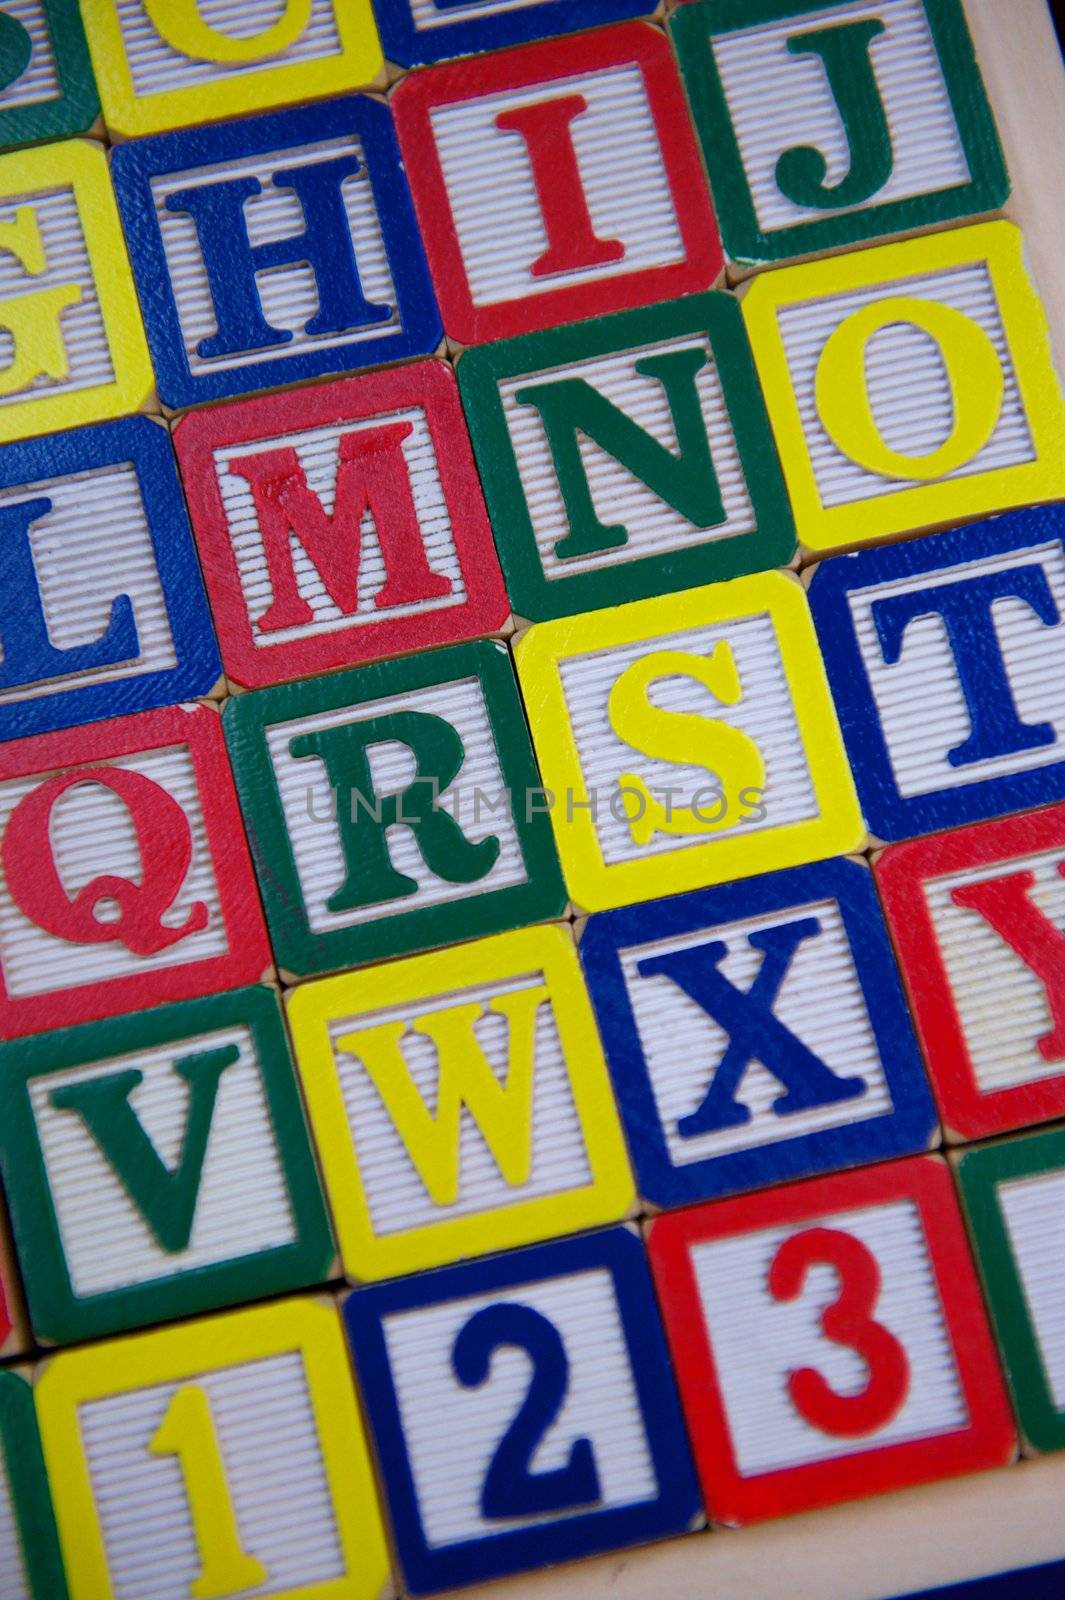 Rows of Children's Alphabet Blocks by pixelsnap